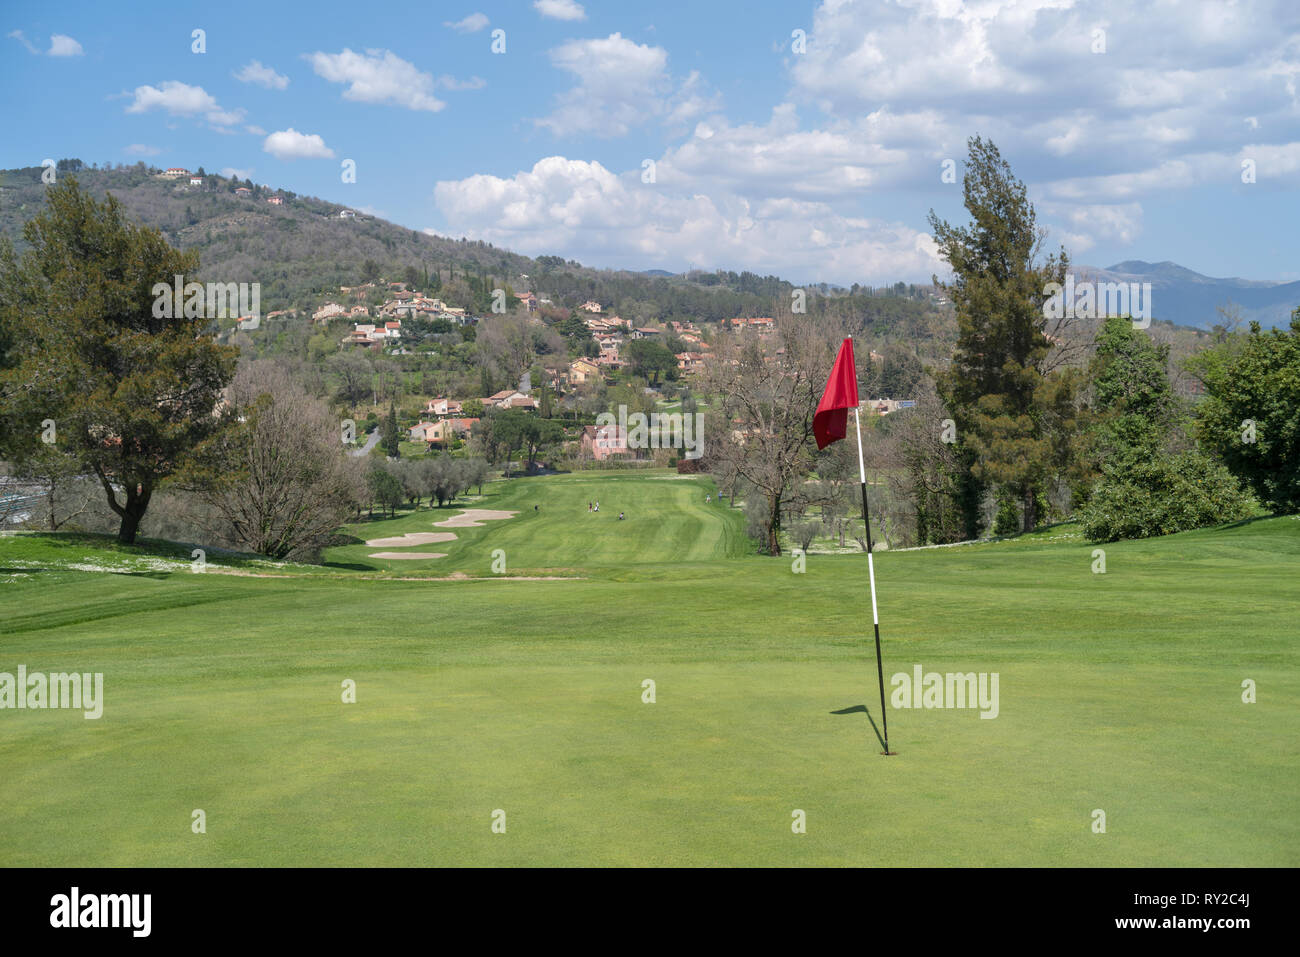 Garlenda golf course, Province of Savona, Liguria region, Italy Stock Photo  - Alamy